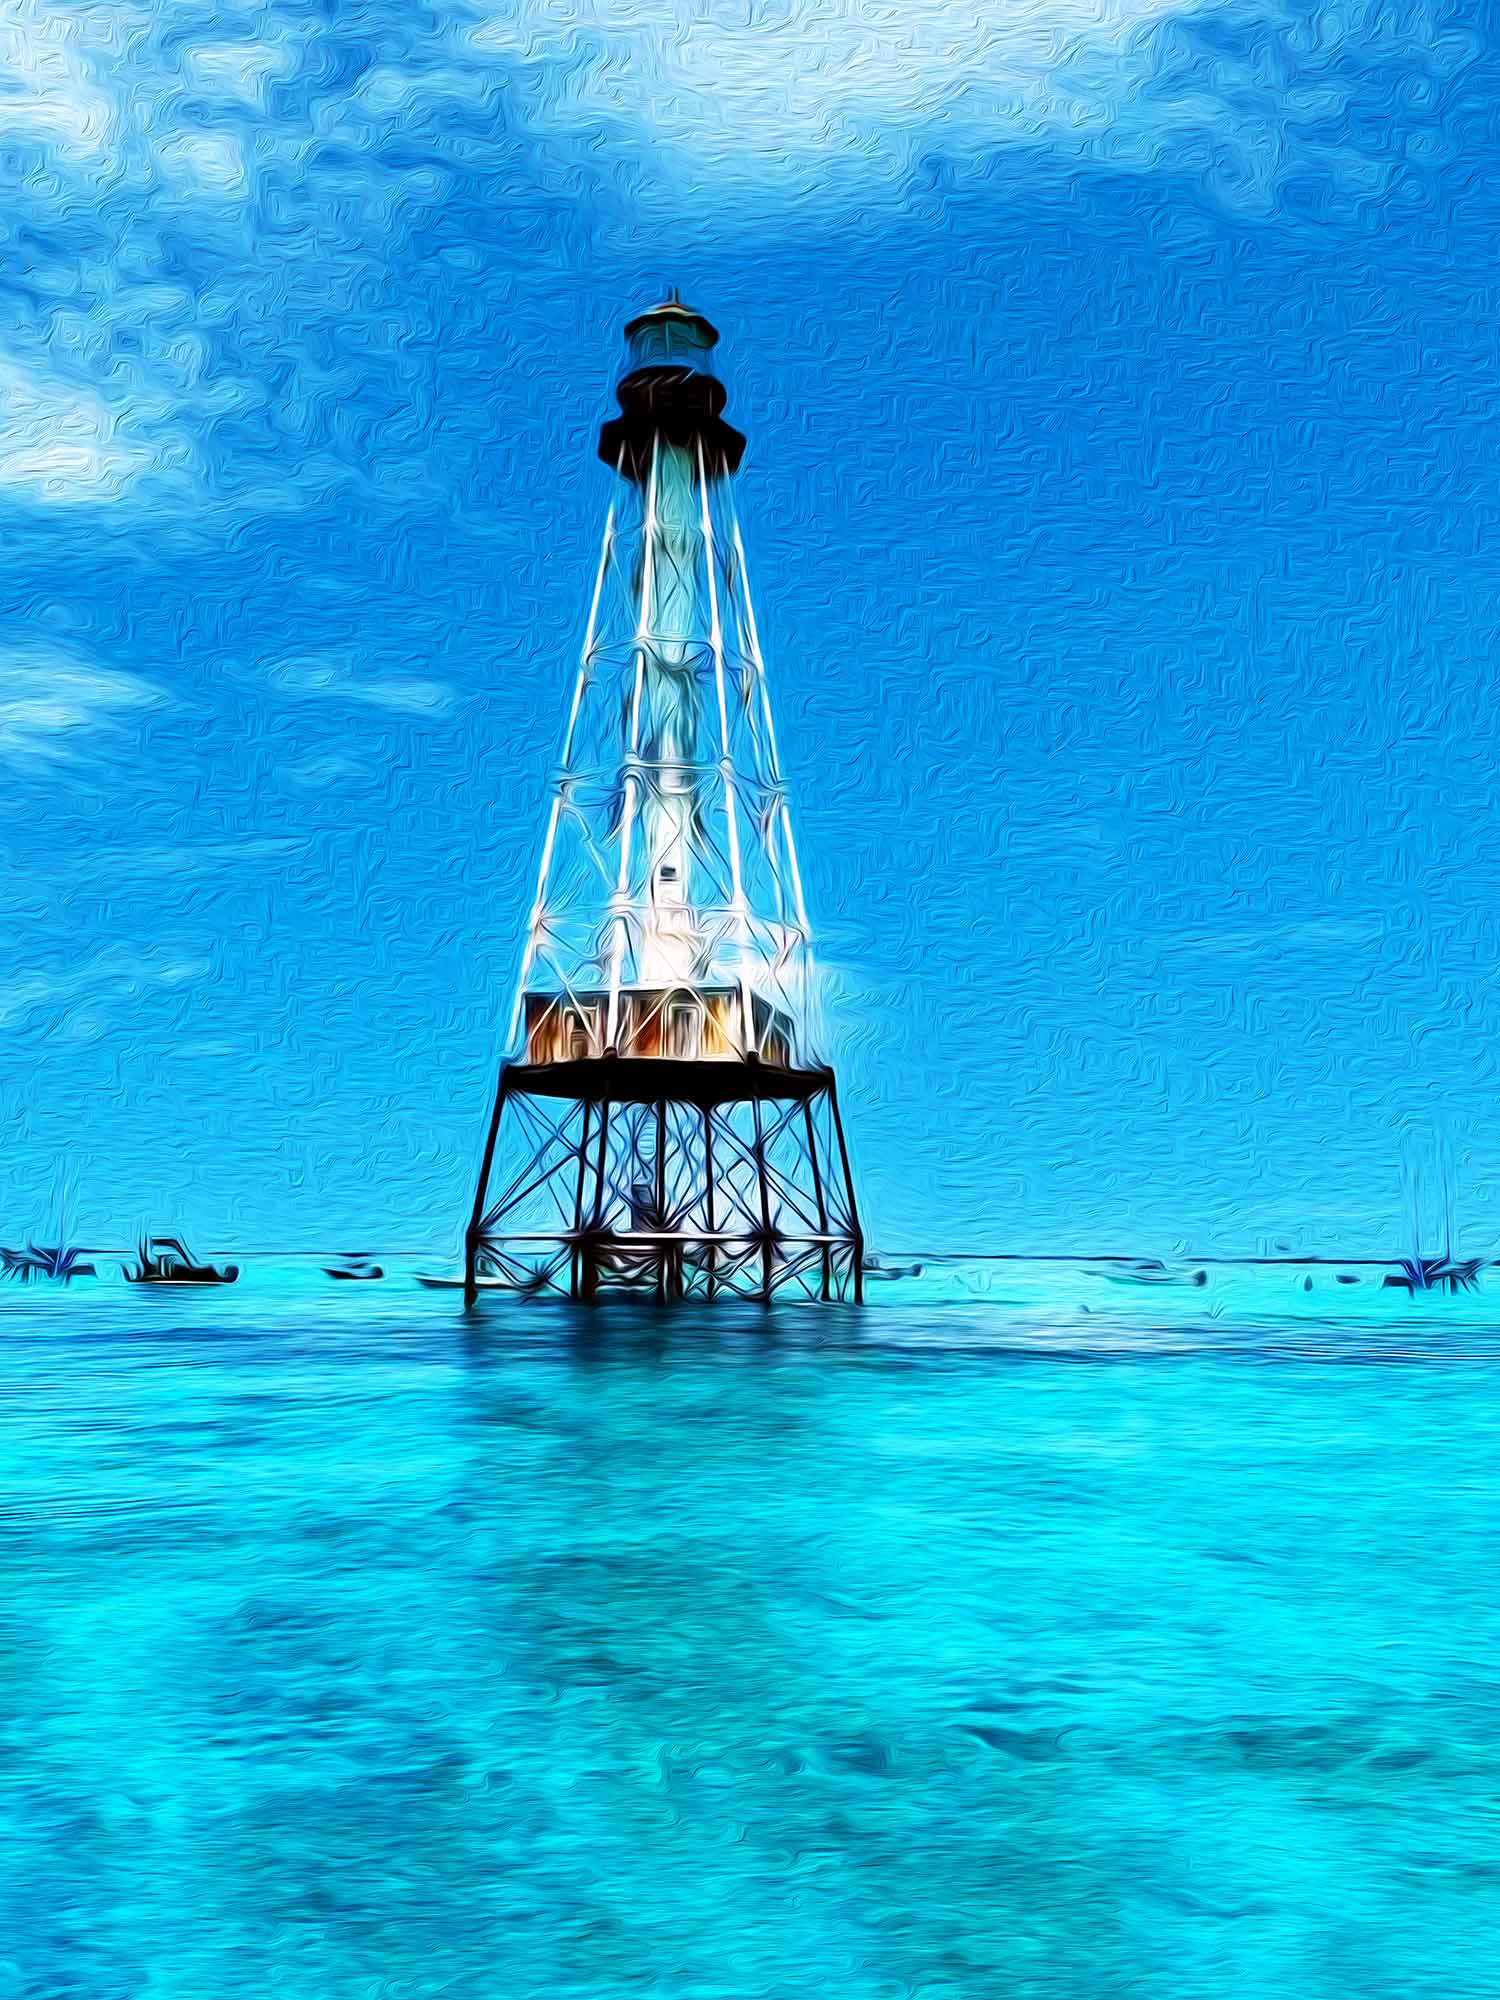 Alligator Reef Lighthouse Art (Islamorada) - Backyards of the Sea